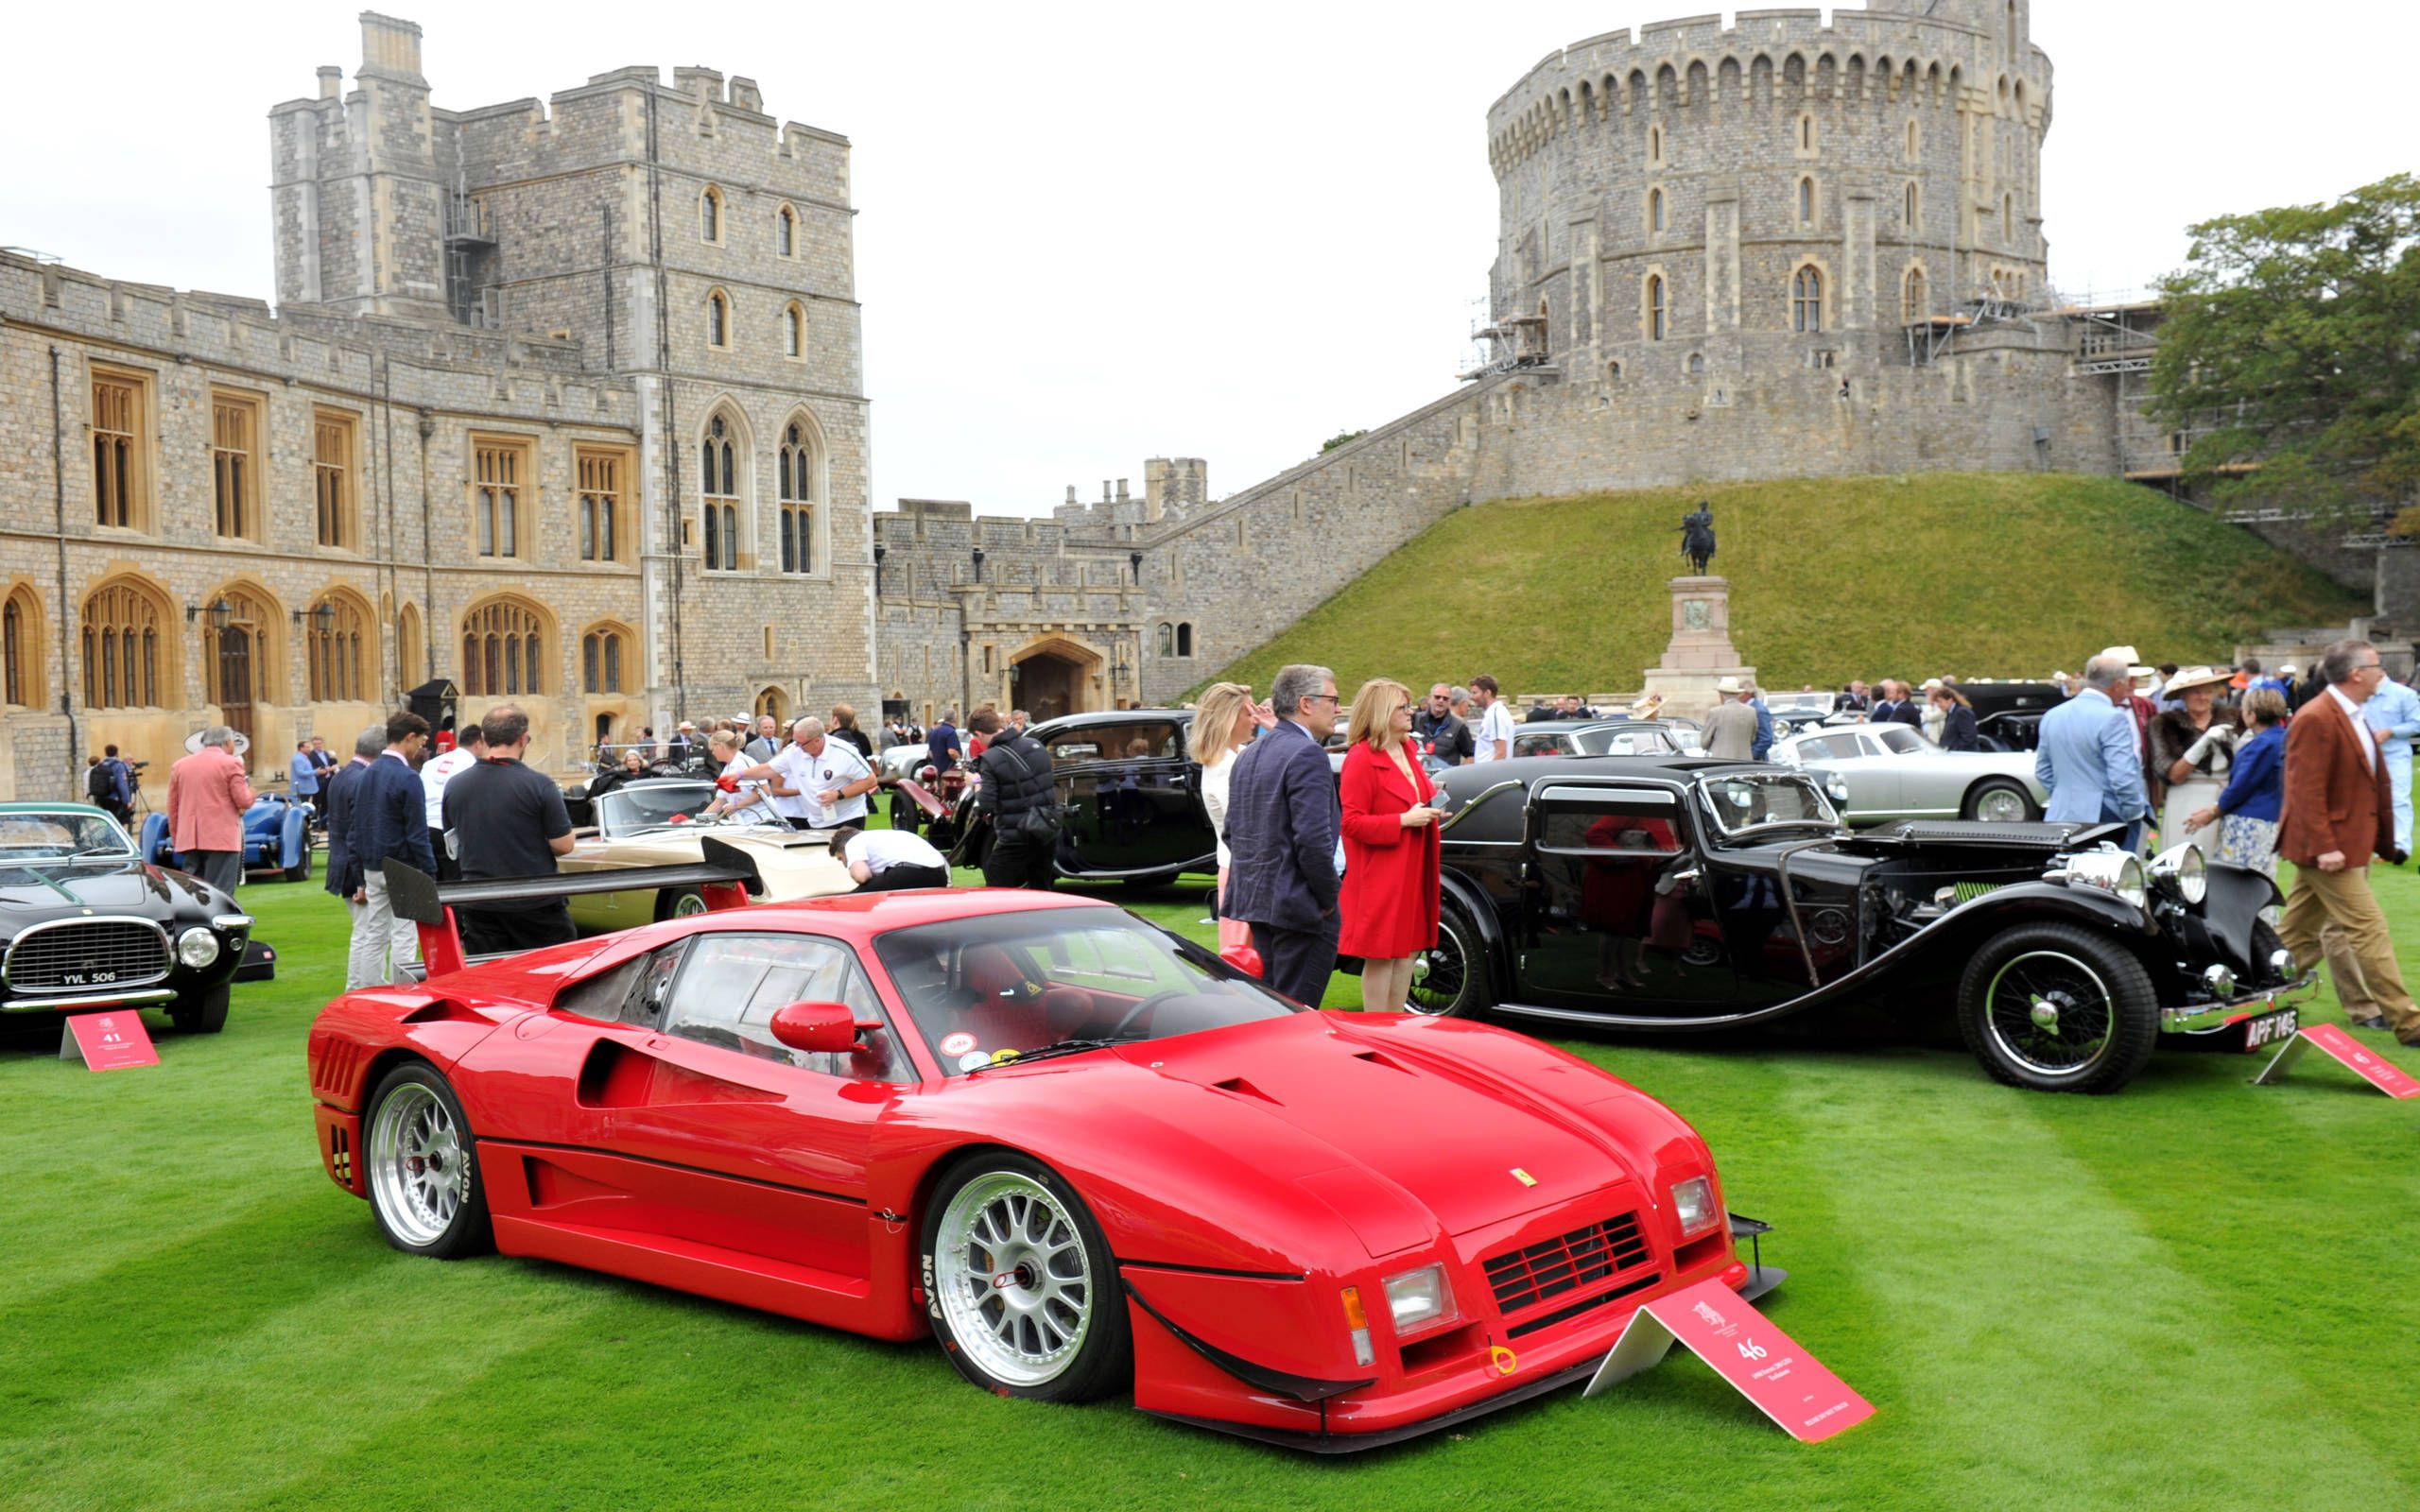 288 GTO Evoluzione, o último carro de corrida de Enzo Ferrari – AUTO&TÉCNICA